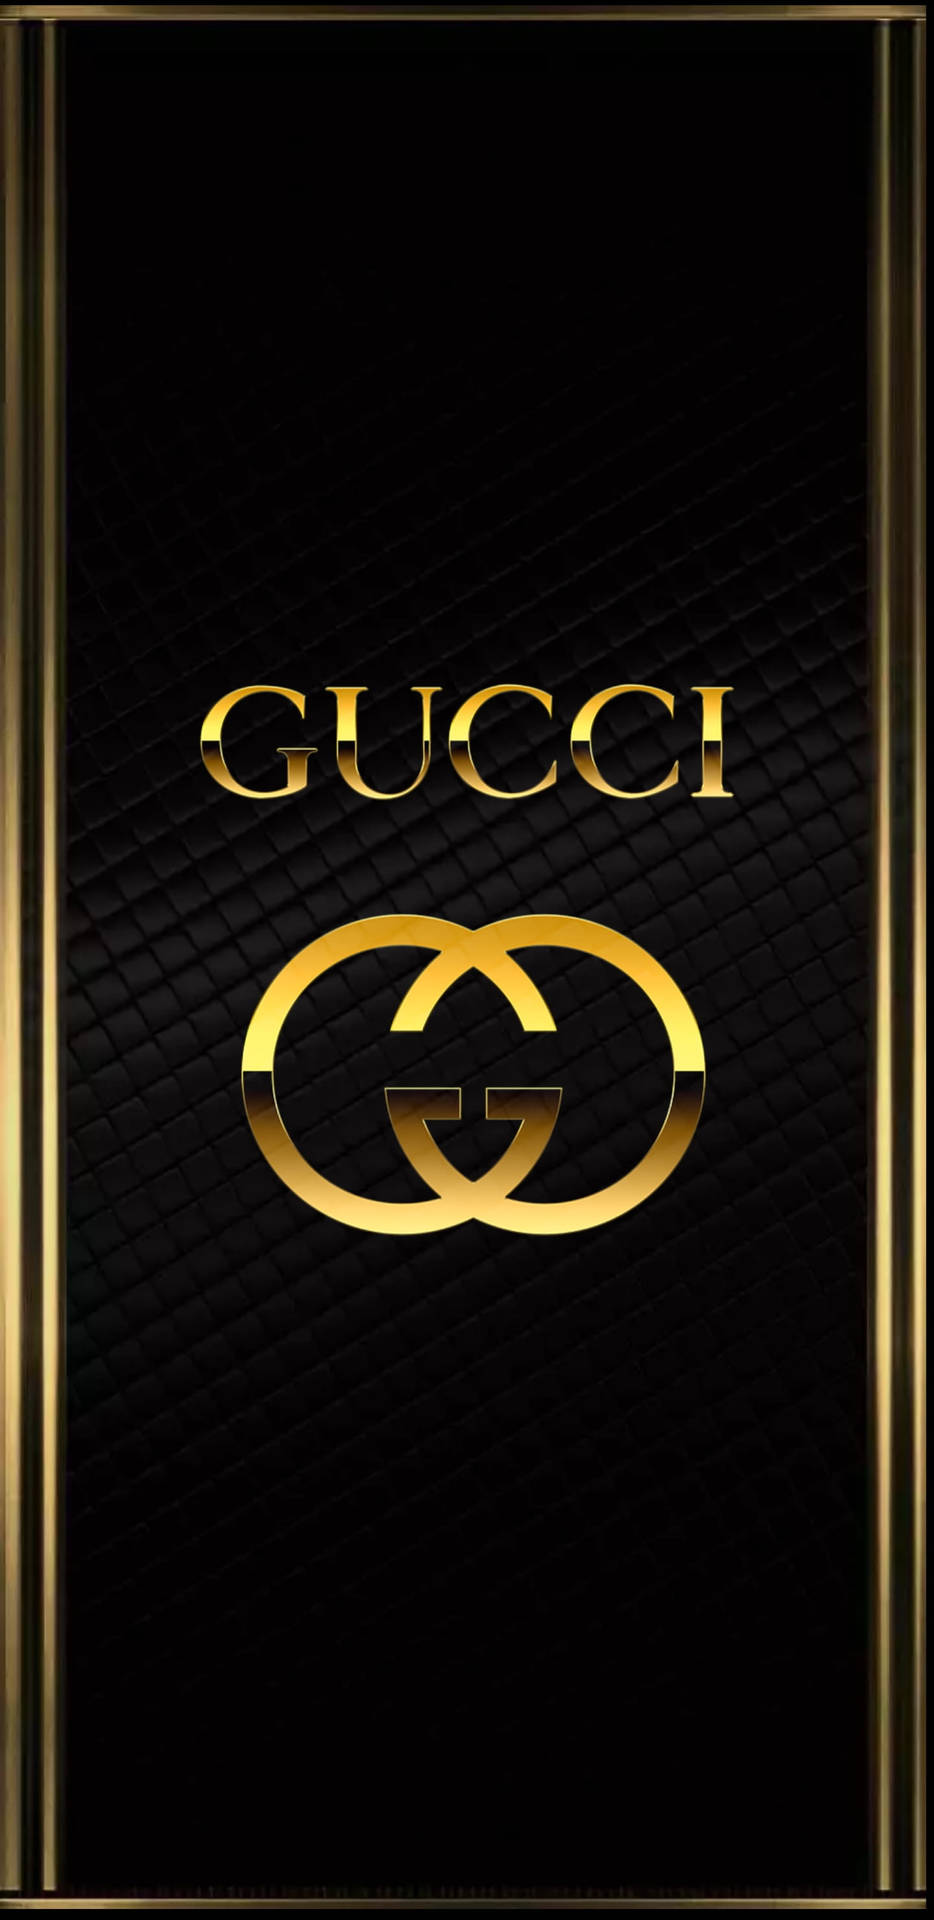 gesponsord Voorgevoel helpen Free Gucci Iphone Wallpaper Downloads, [100+] Gucci Iphone Wallpapers for  FREE | Wallpapers.com